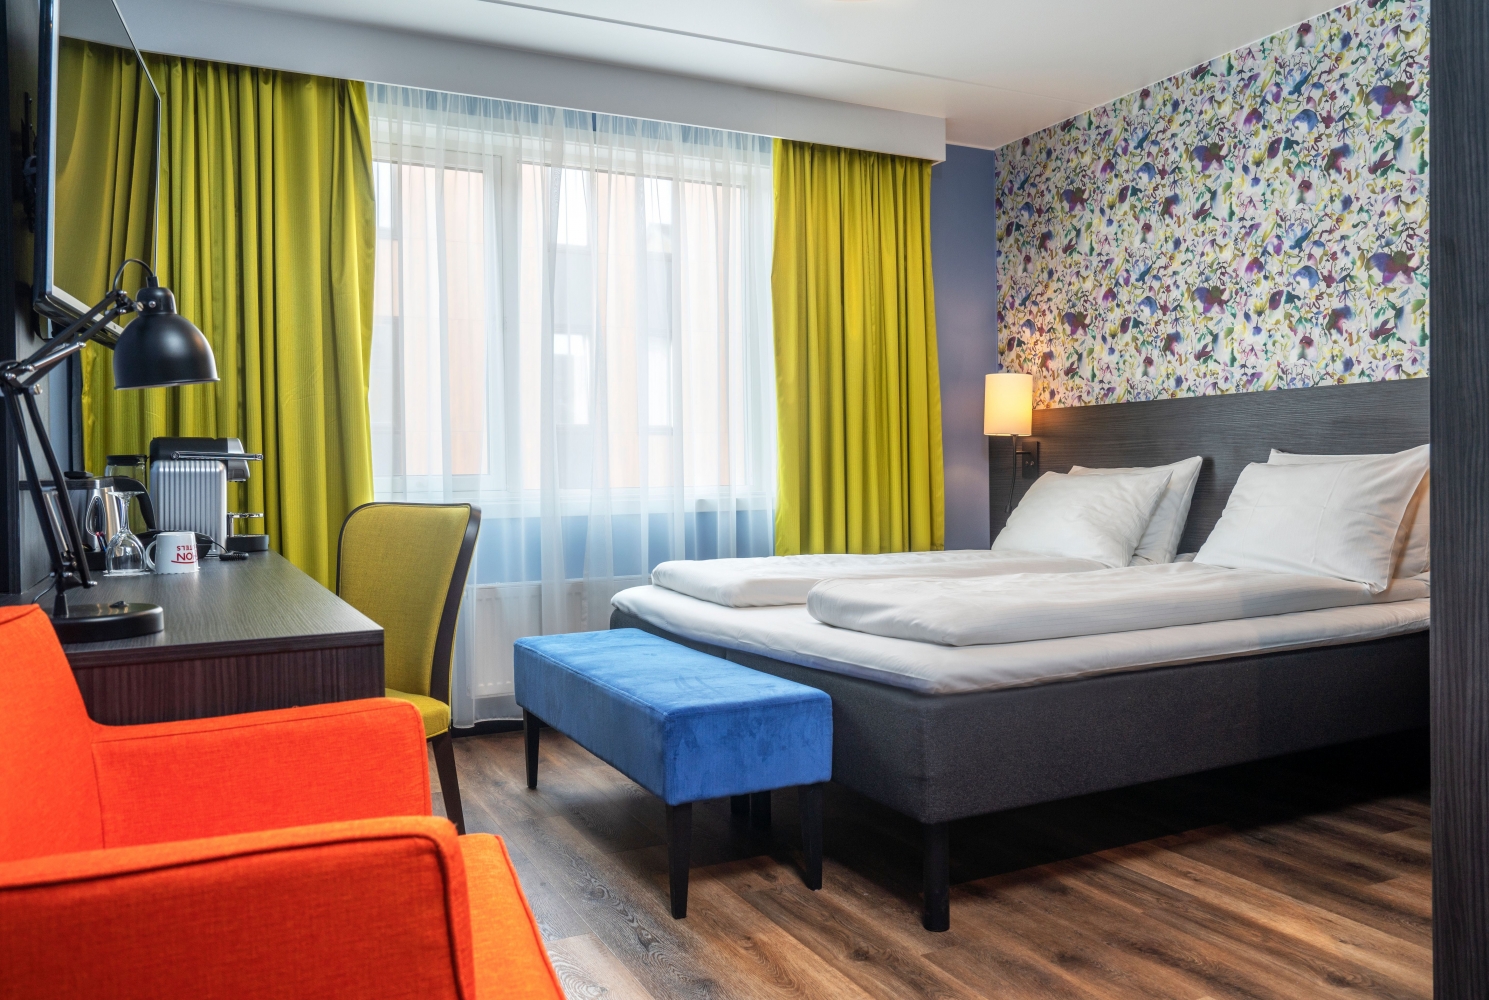 Superior bedroom in Thon hotel Troms;